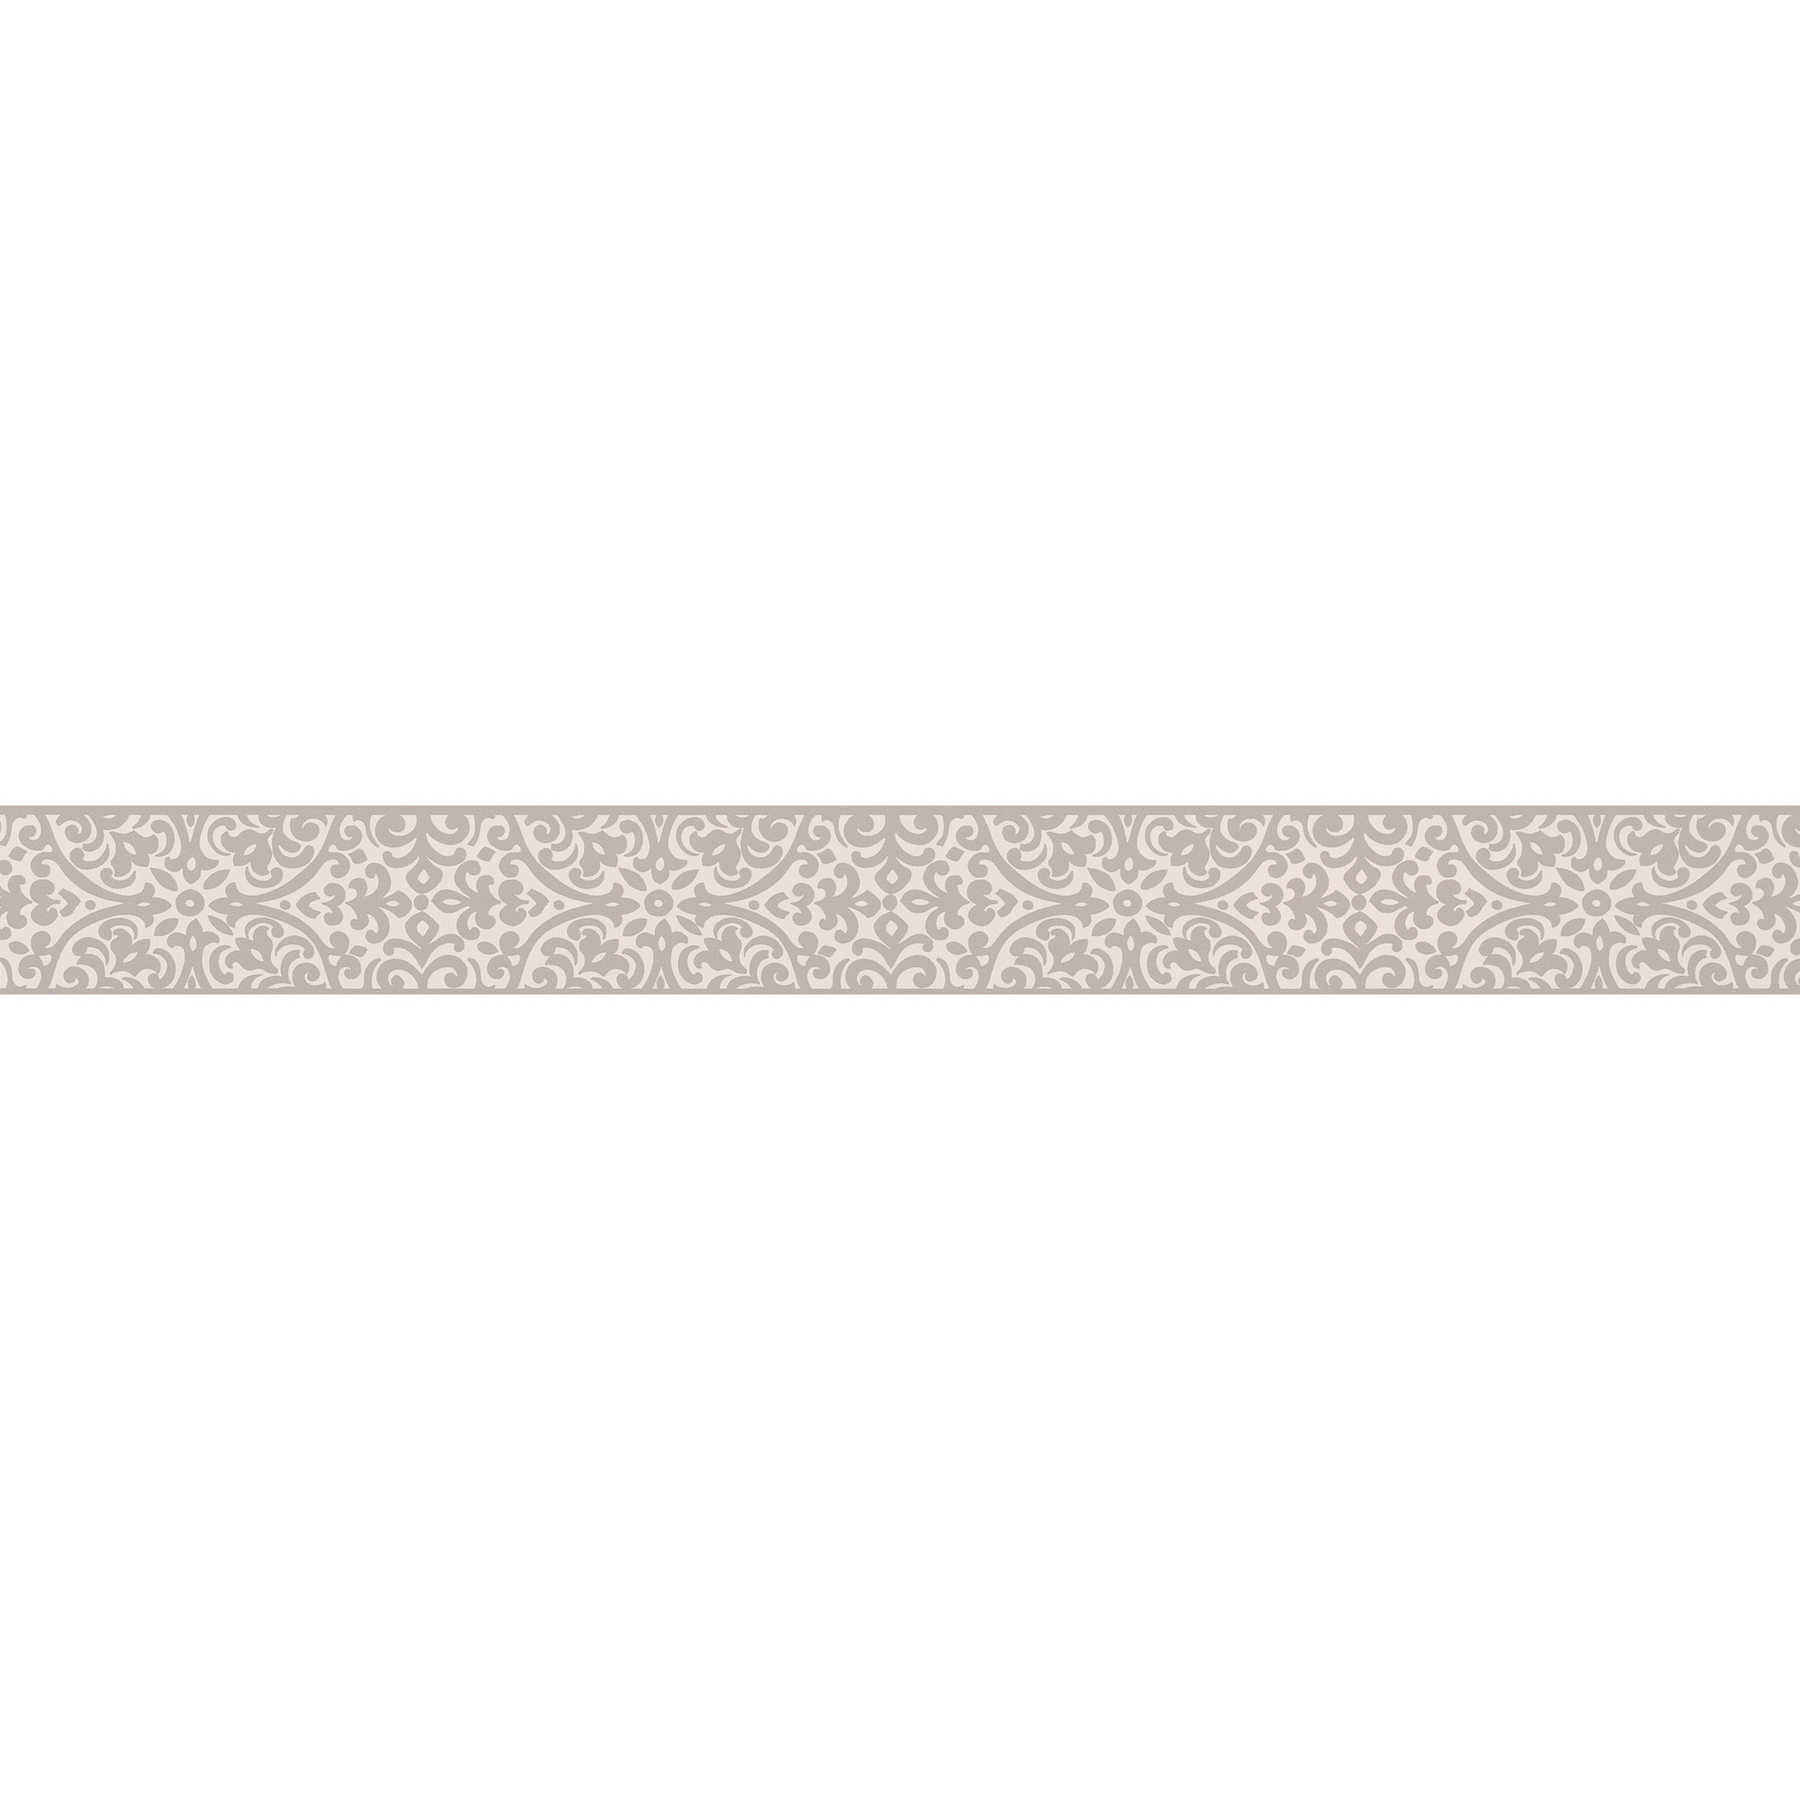         Tapetenbordüre mit Ornamentmuster – Beige, Braun, Grau
    